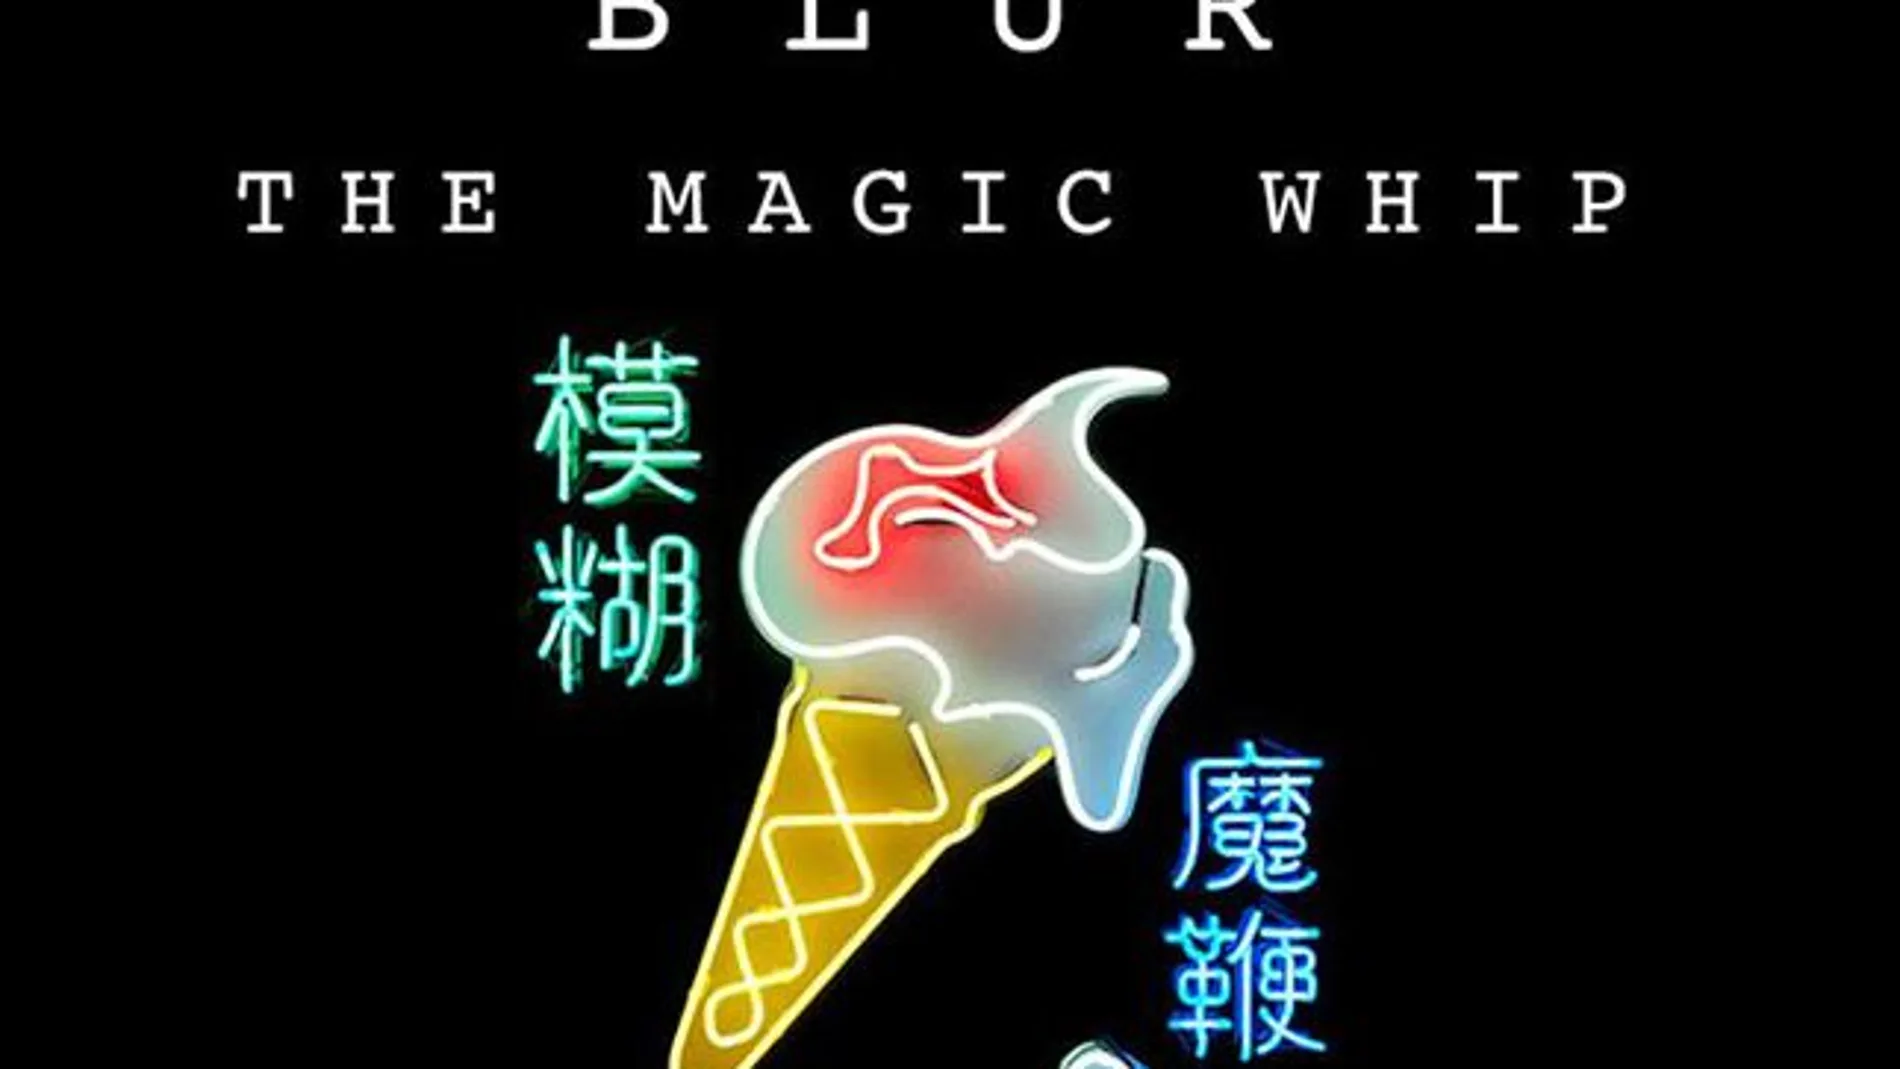 “The Magic Wip”, nuevo álbum de Blur